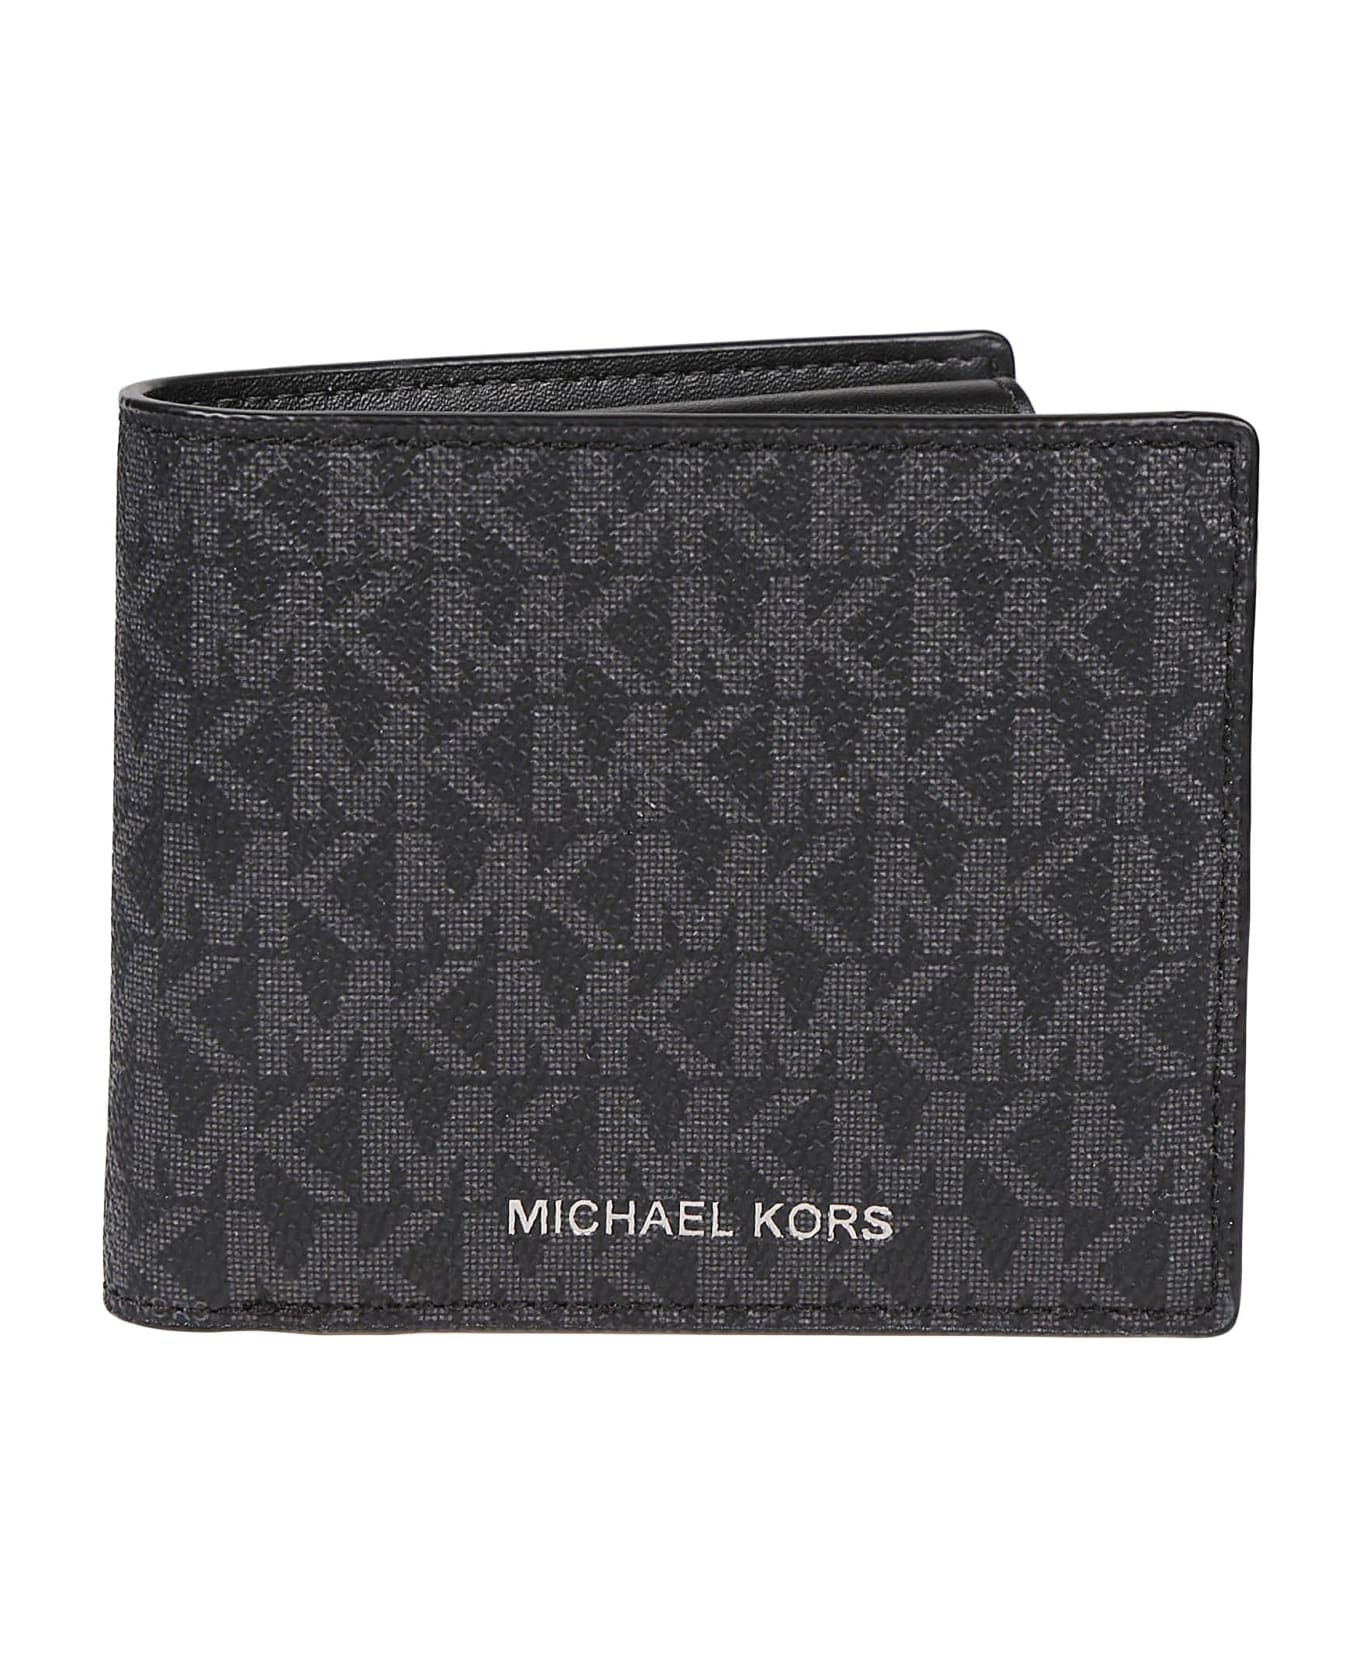 Michael Kors Billfold - Black 財布